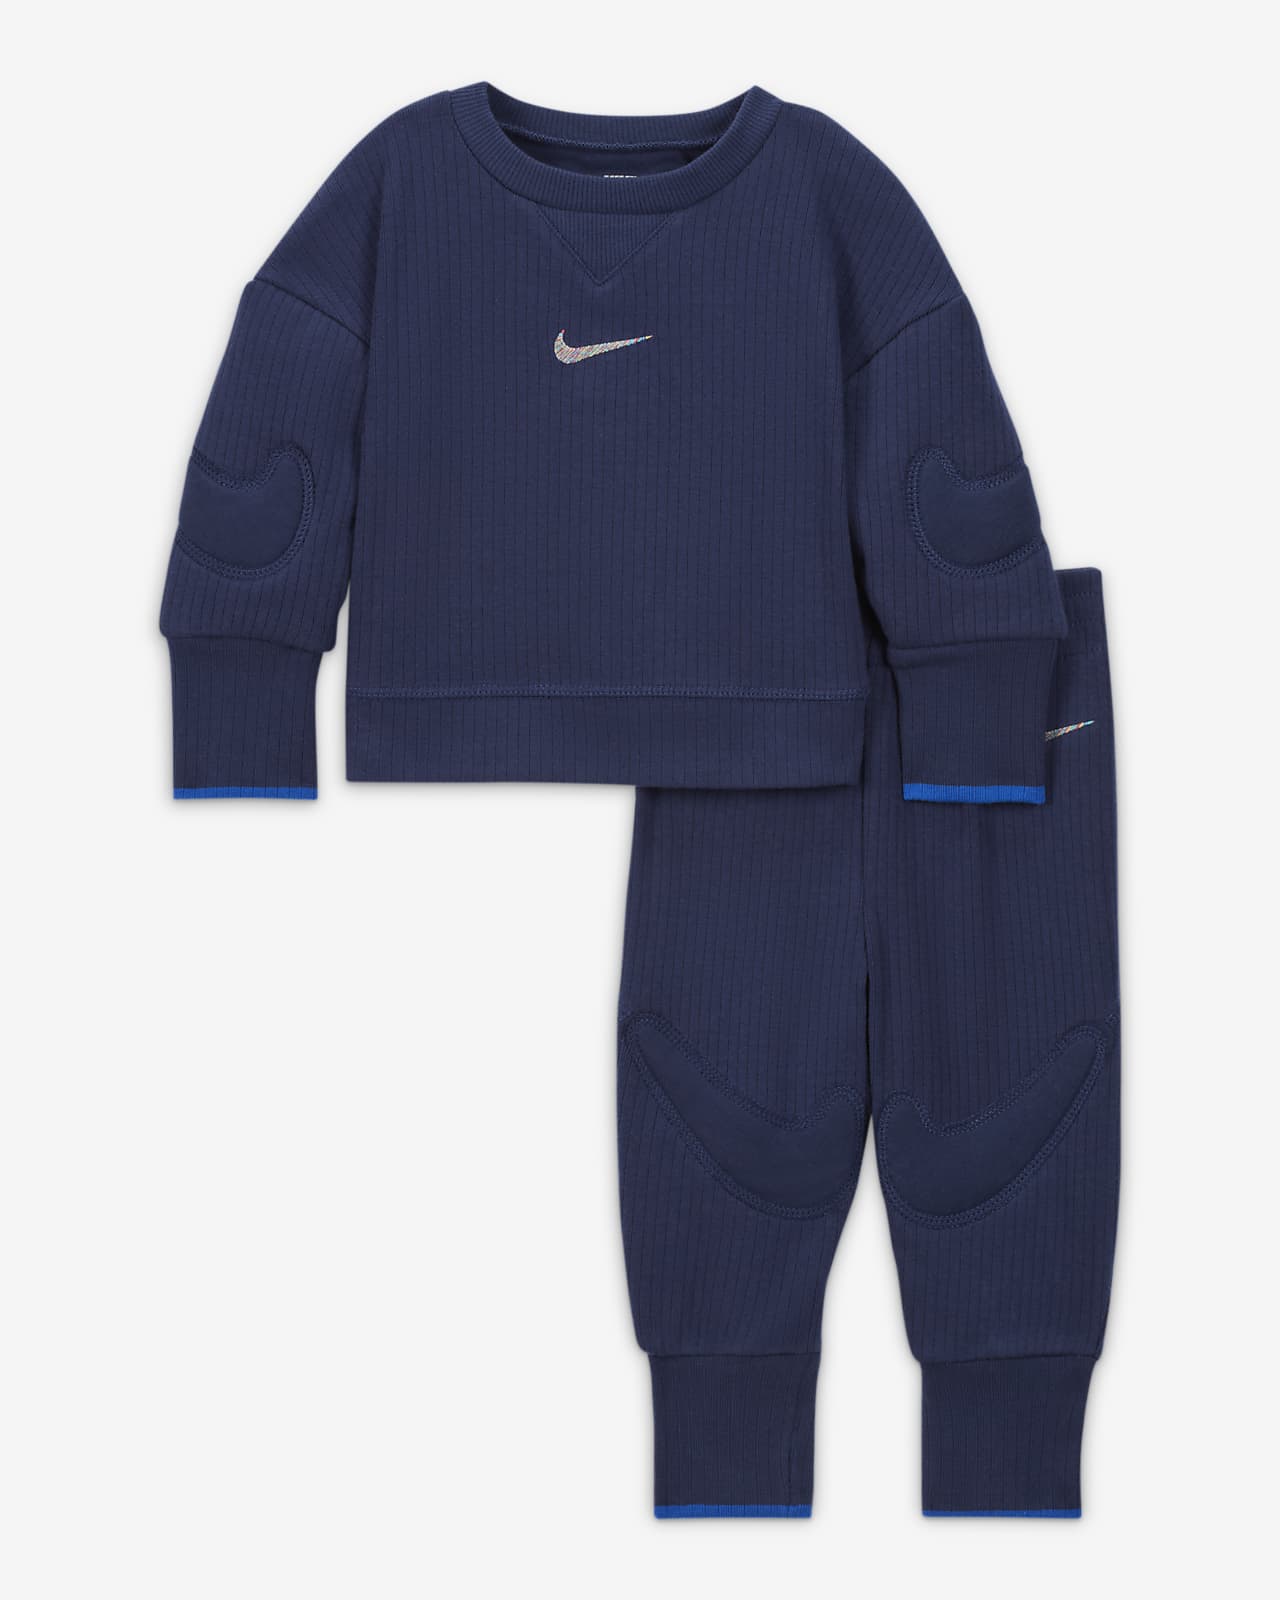 Nike "Ready, Set" Baby 2-Piece Set